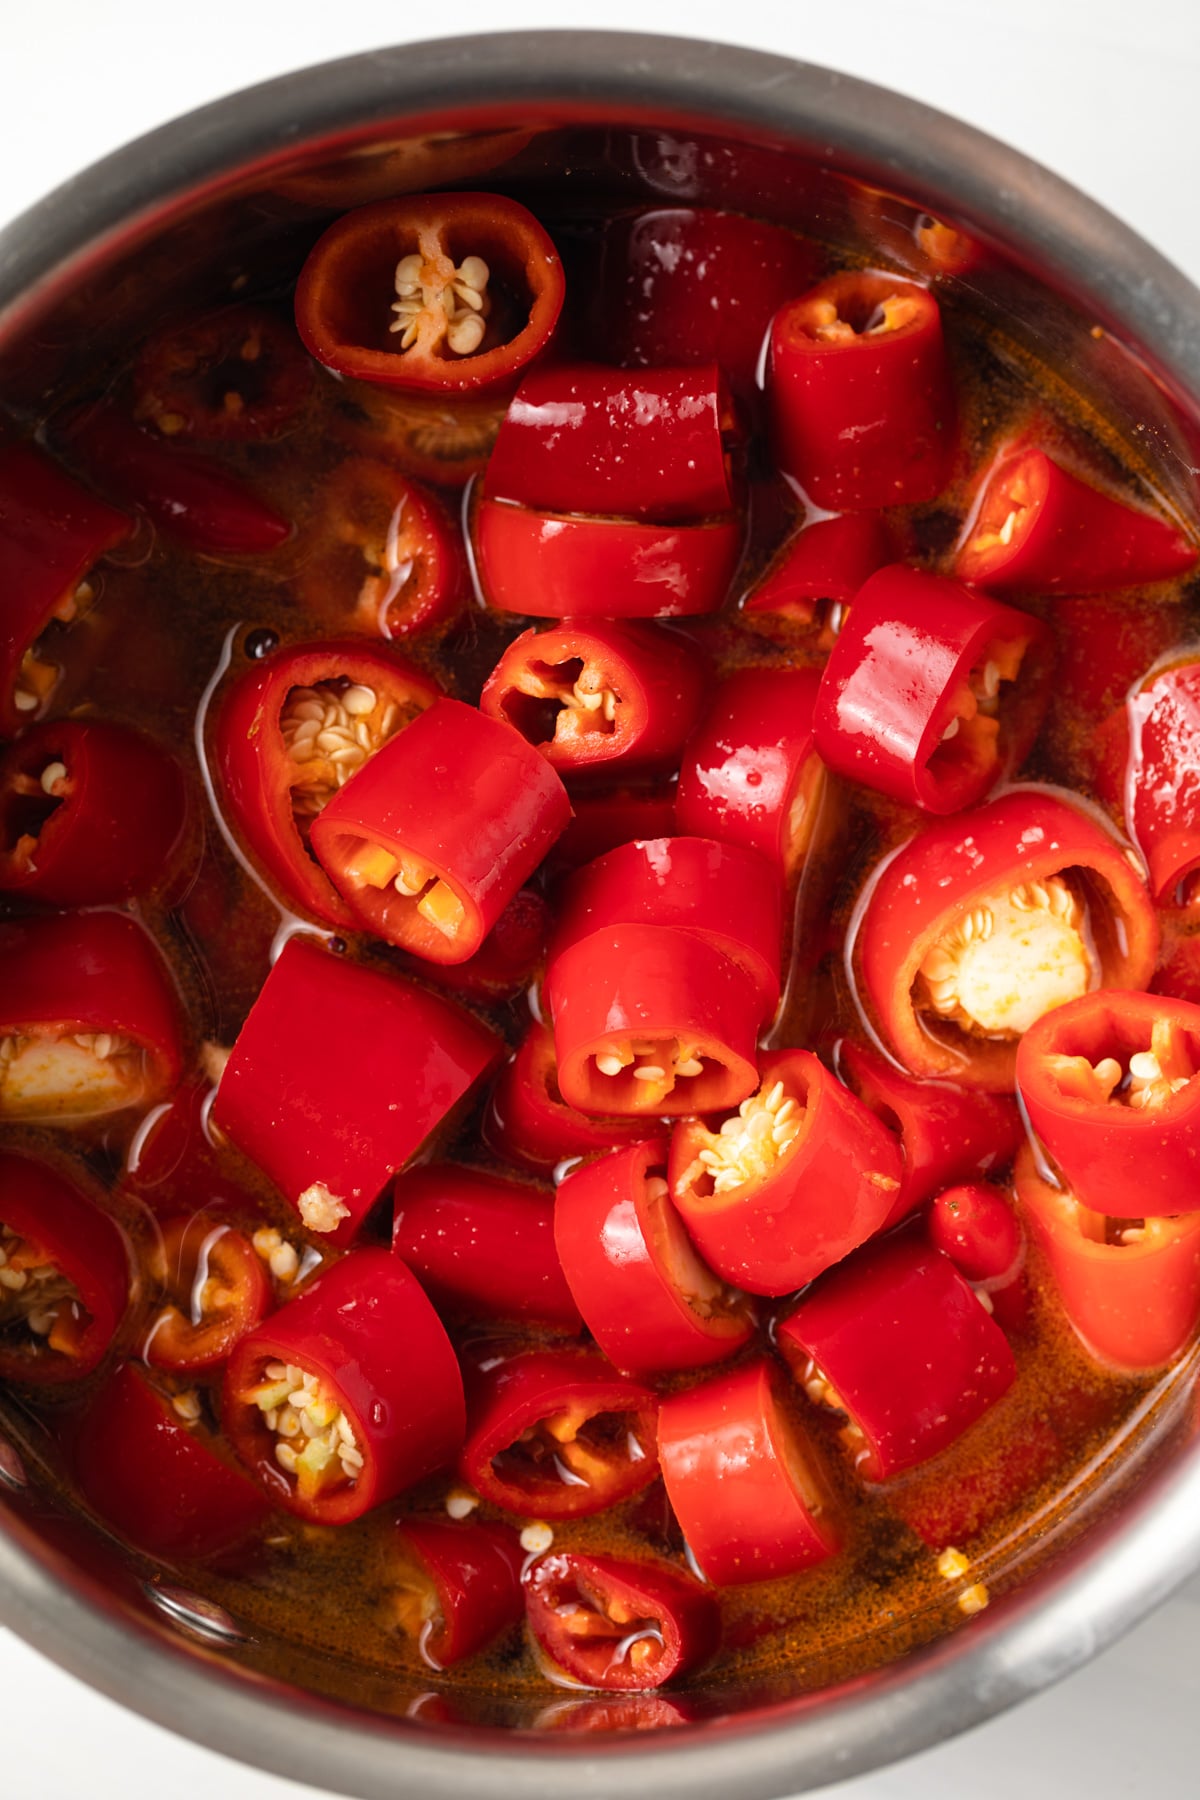 Chopped cayenne peppers in vinegar in a saucepan.